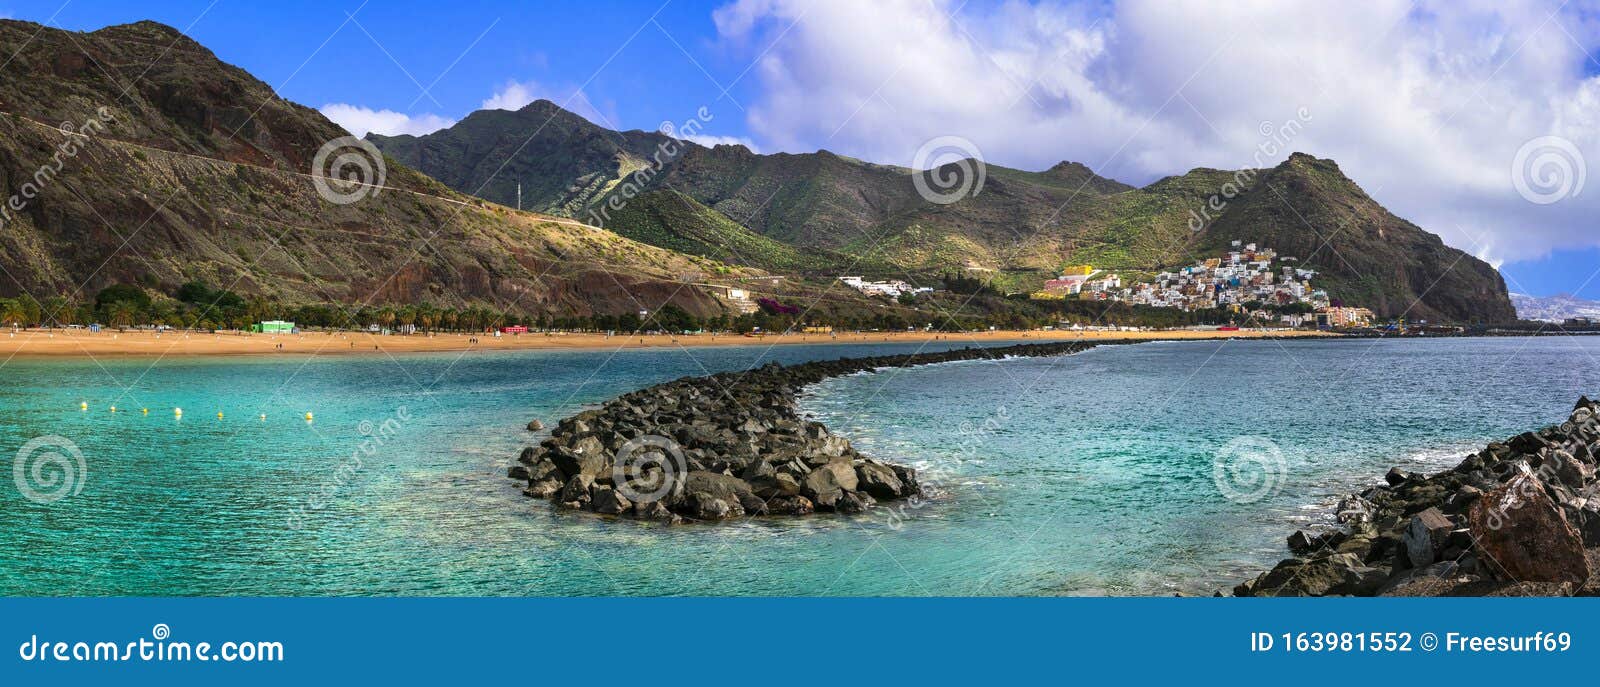 Amazing Nature of Volcanic Tenerife Island - Beautiful Teresitas Beach, Canary Islands of Spain Stock Photo - Image of place, canary: 163981552